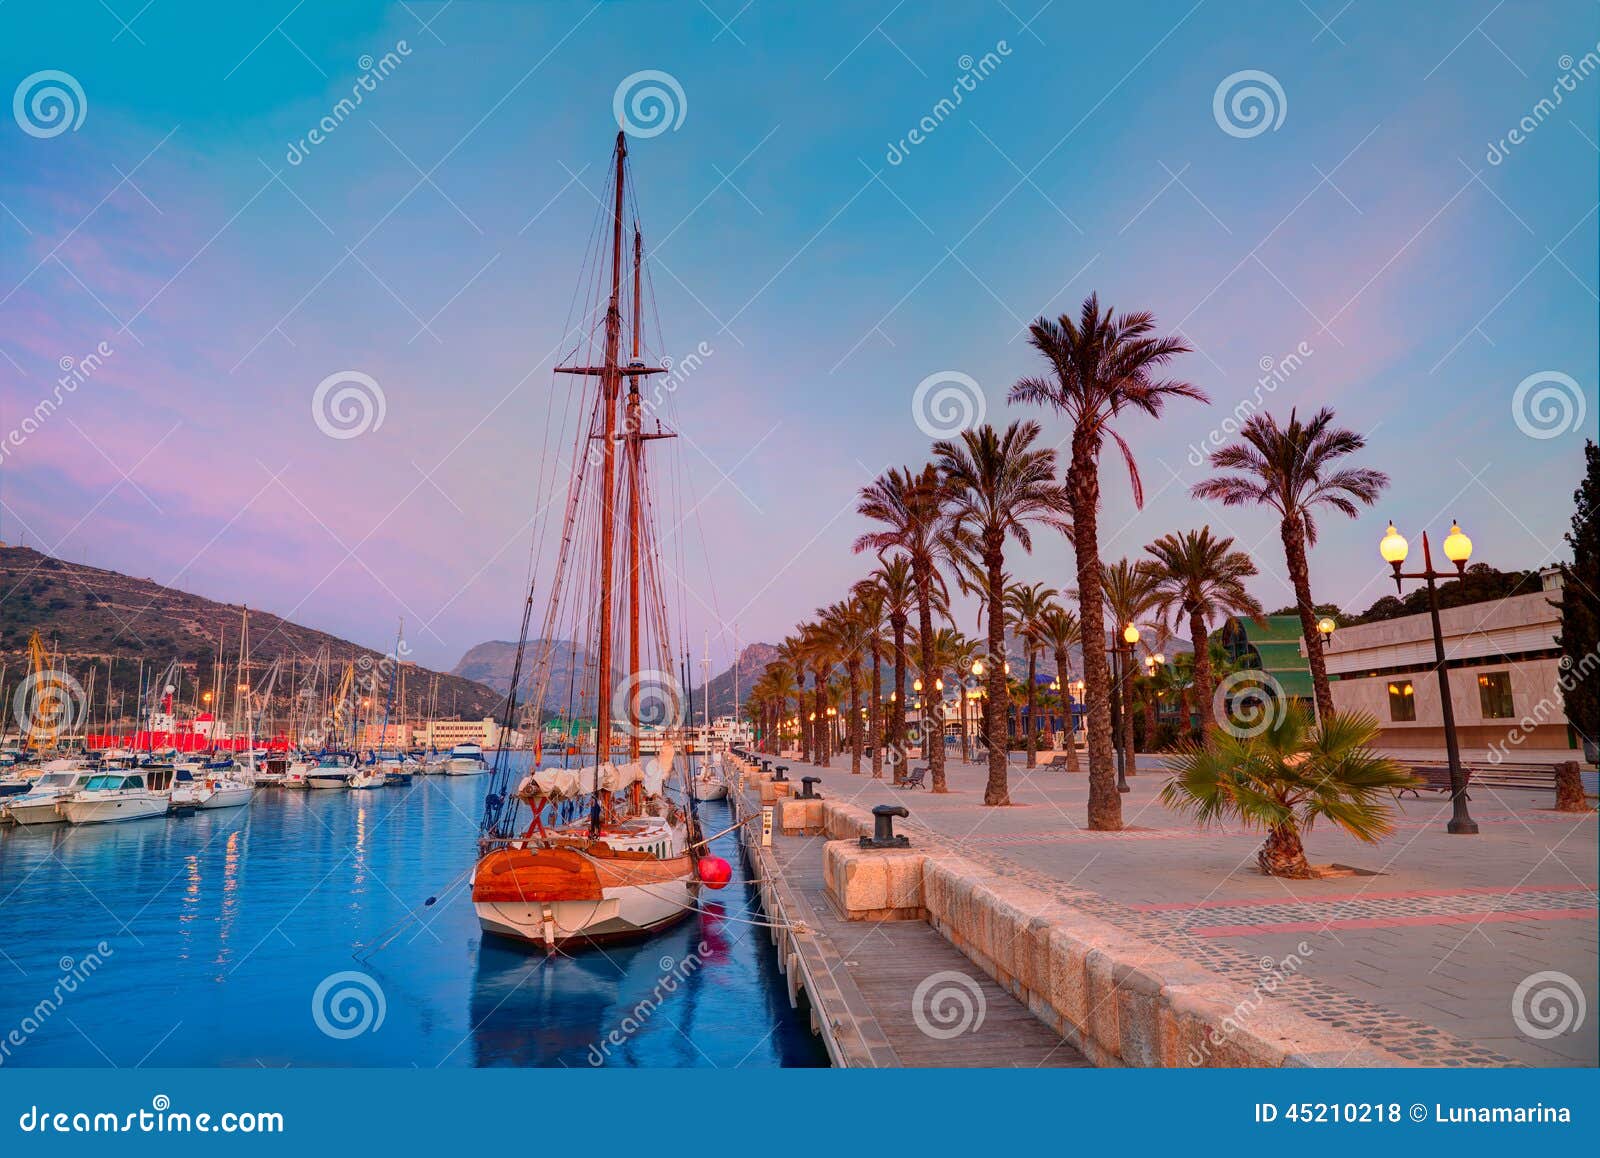 cartagena murcia port marina sunrise in spain